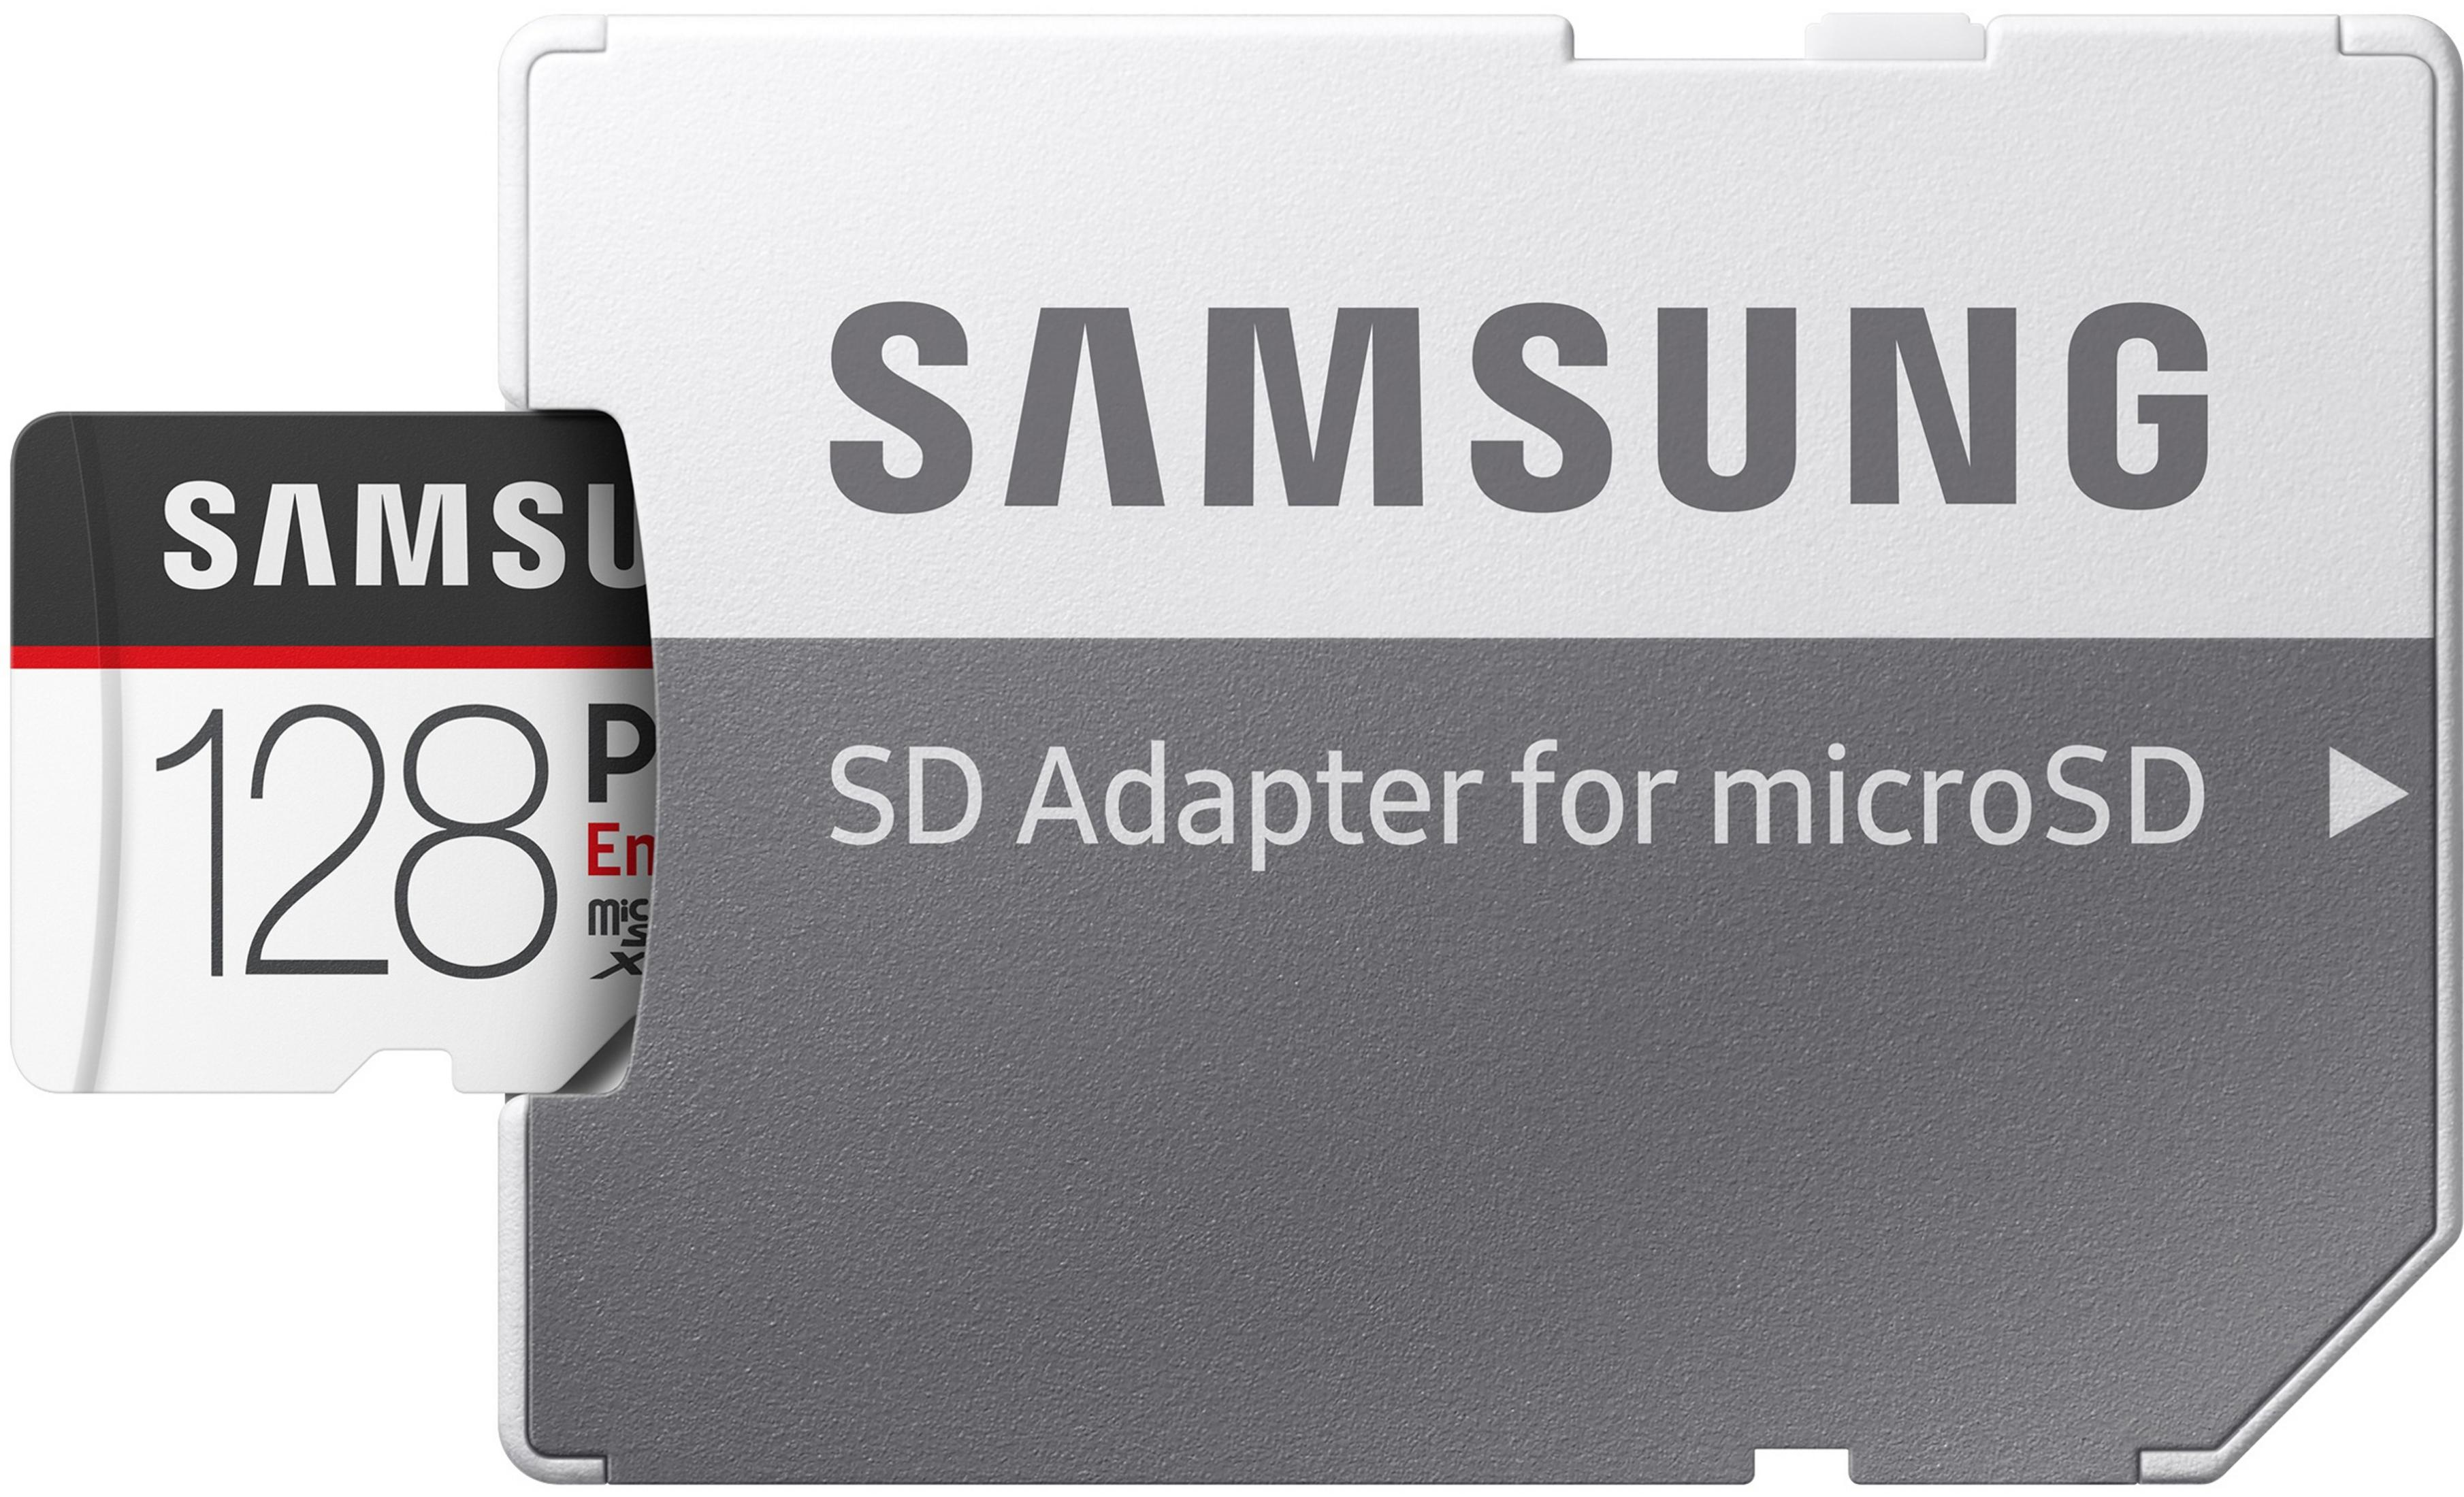 MB/s Micro-SDHC ENDURANCE SAMSUNG 128GB, 128 Speicherkarte, MB-MJ128GA/EU GB, PRO 100